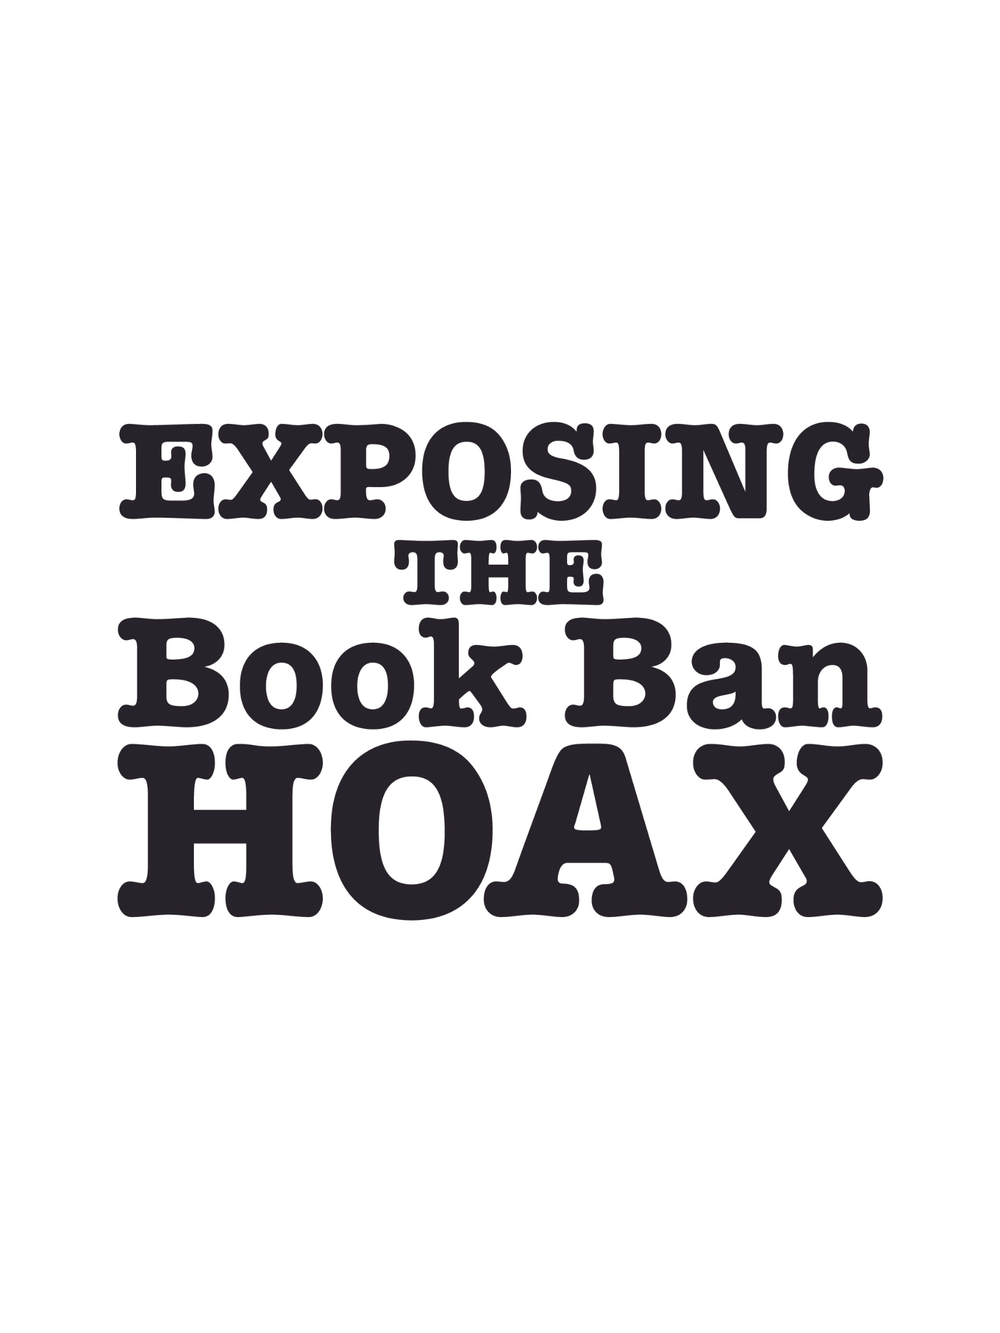 Book Ban Hoax.png